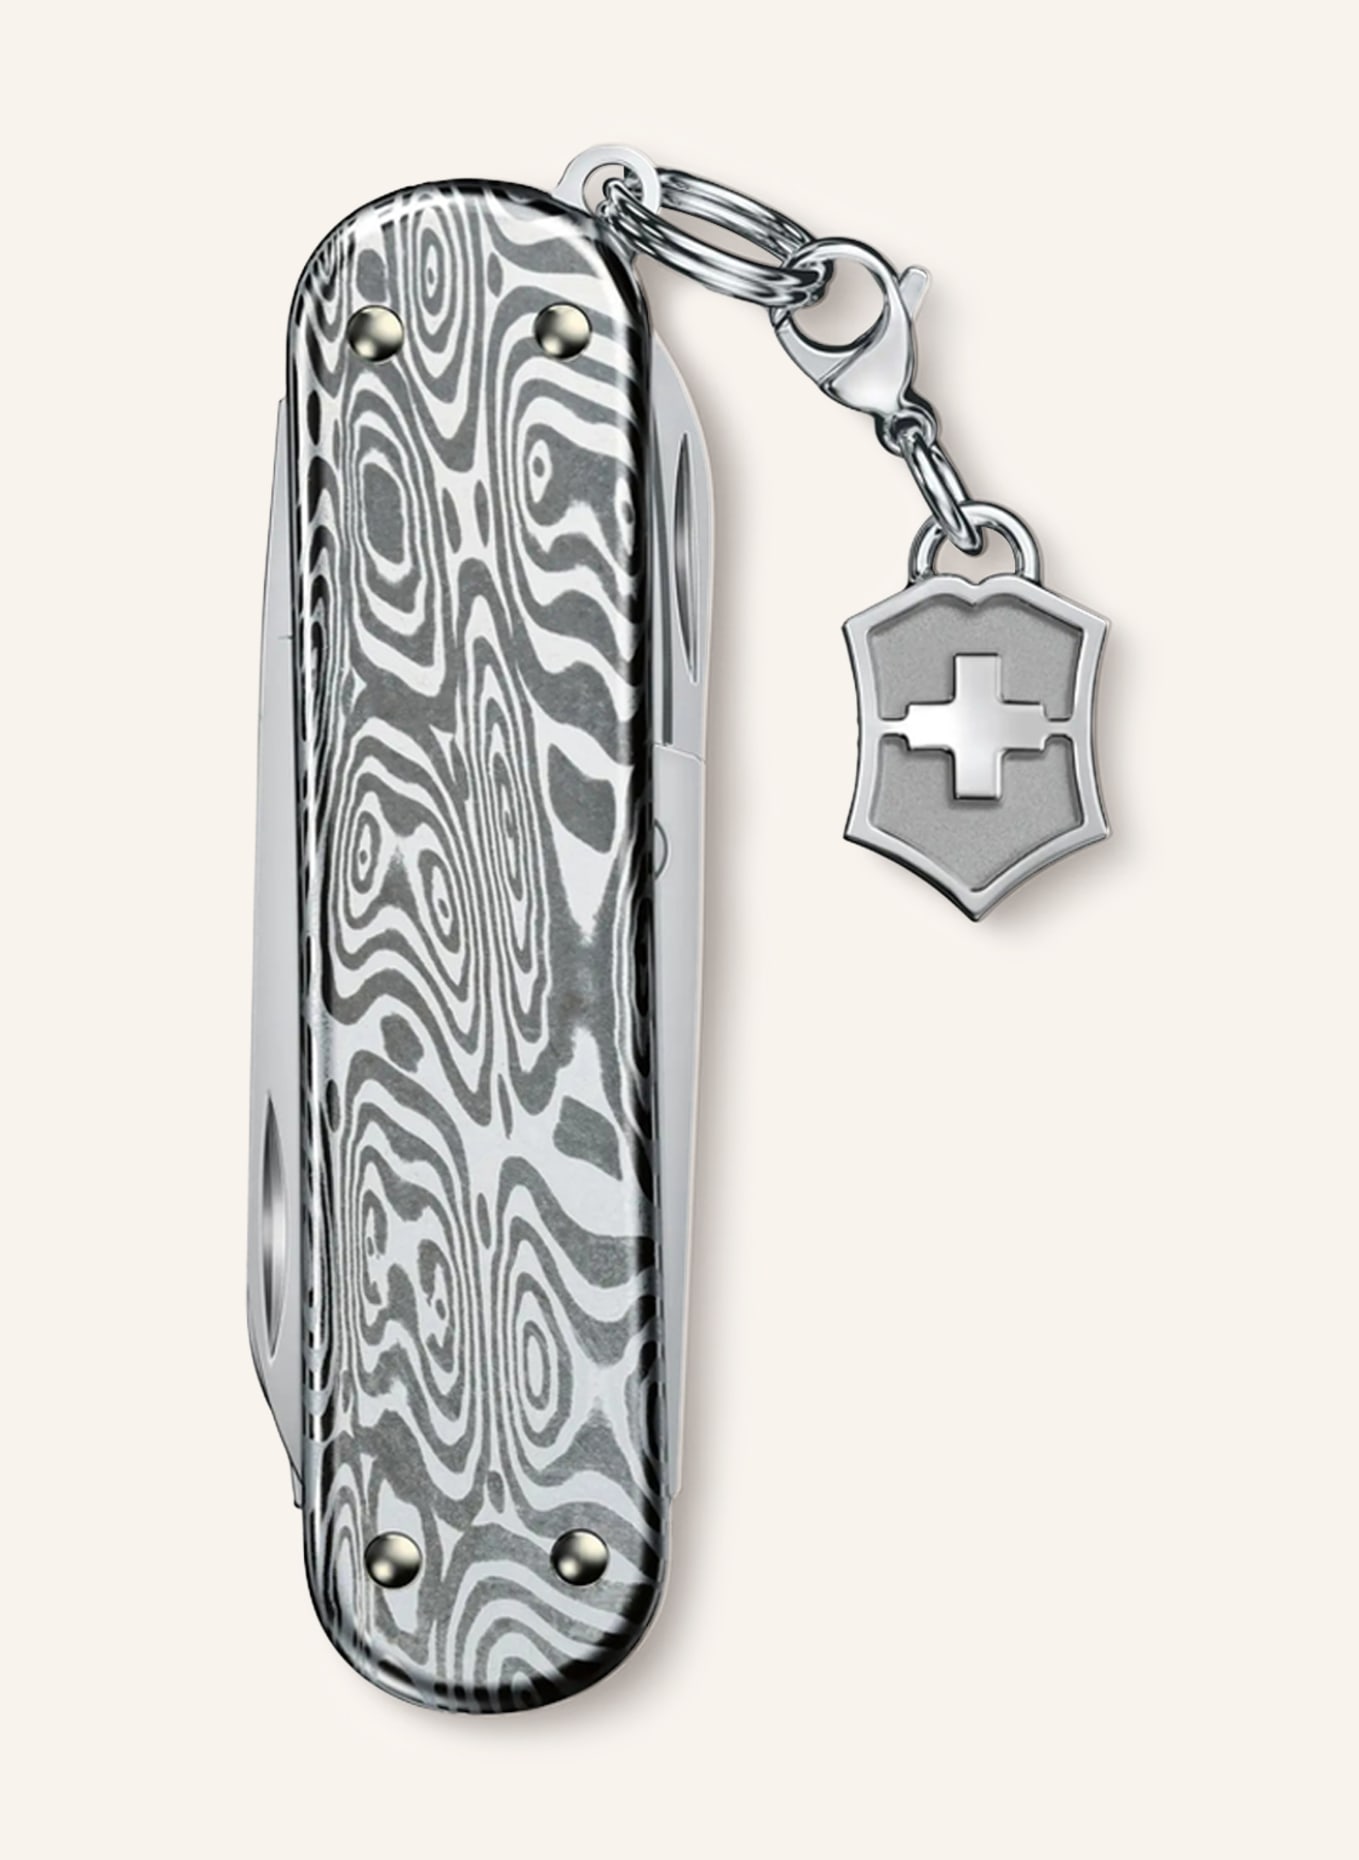 VICTORINOX Pocket knife CLASSIC SD BRILLIANT DAMAST in silver